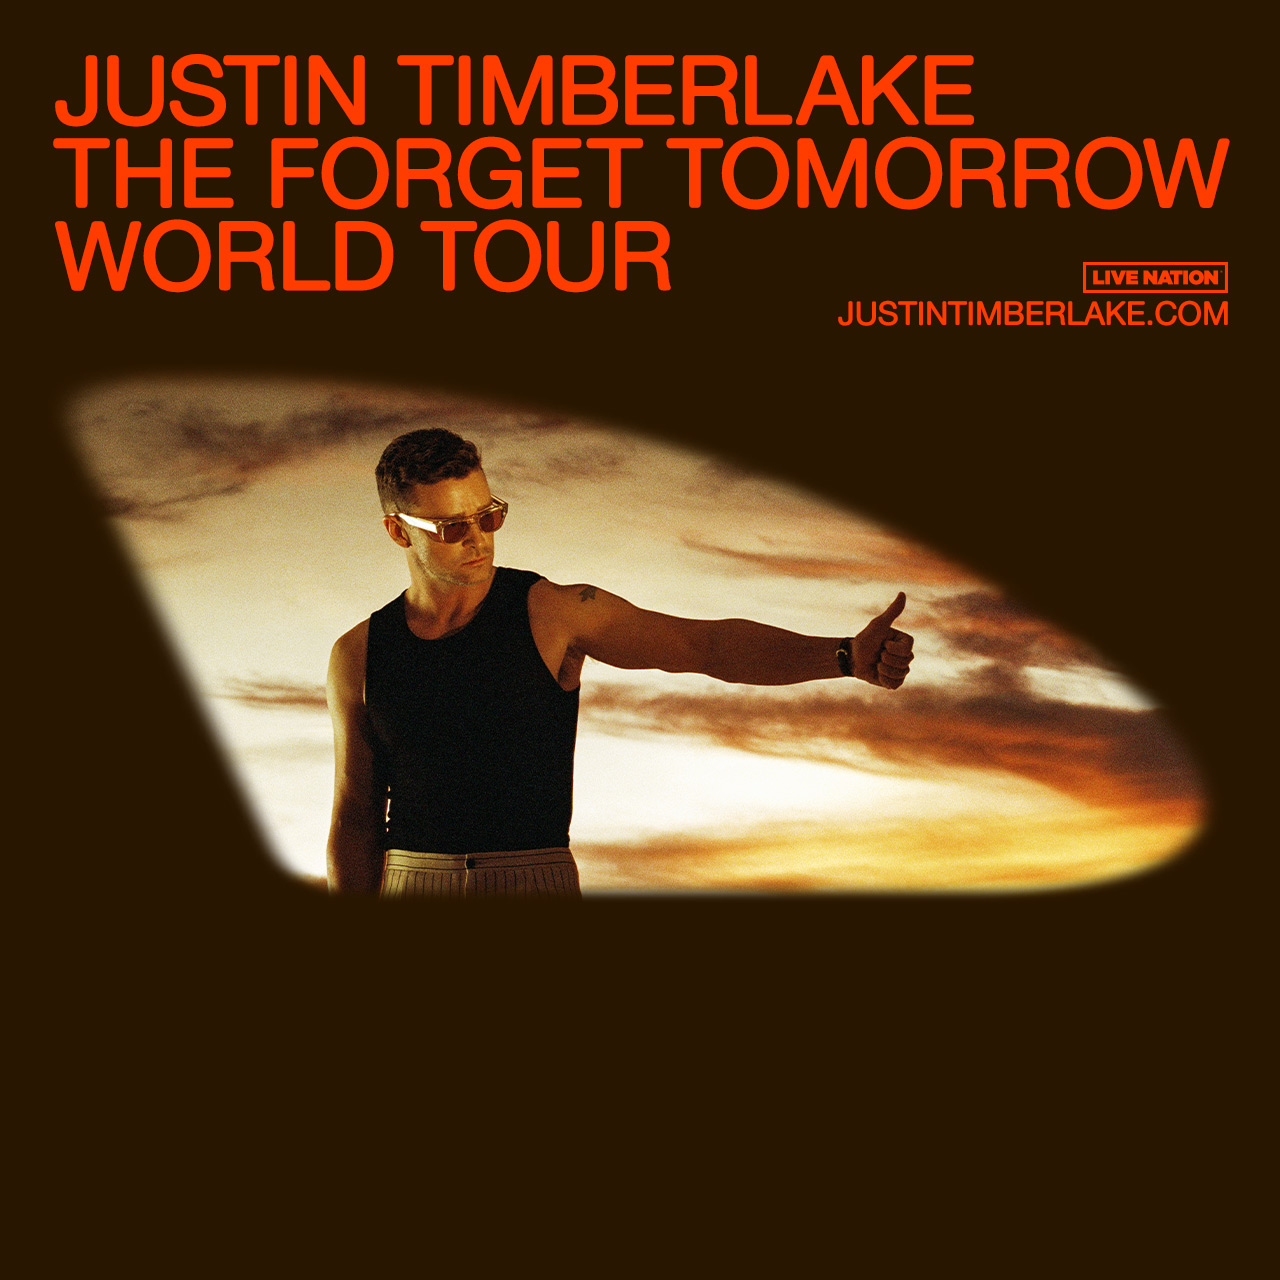 The Forget Tomorrow World Tour